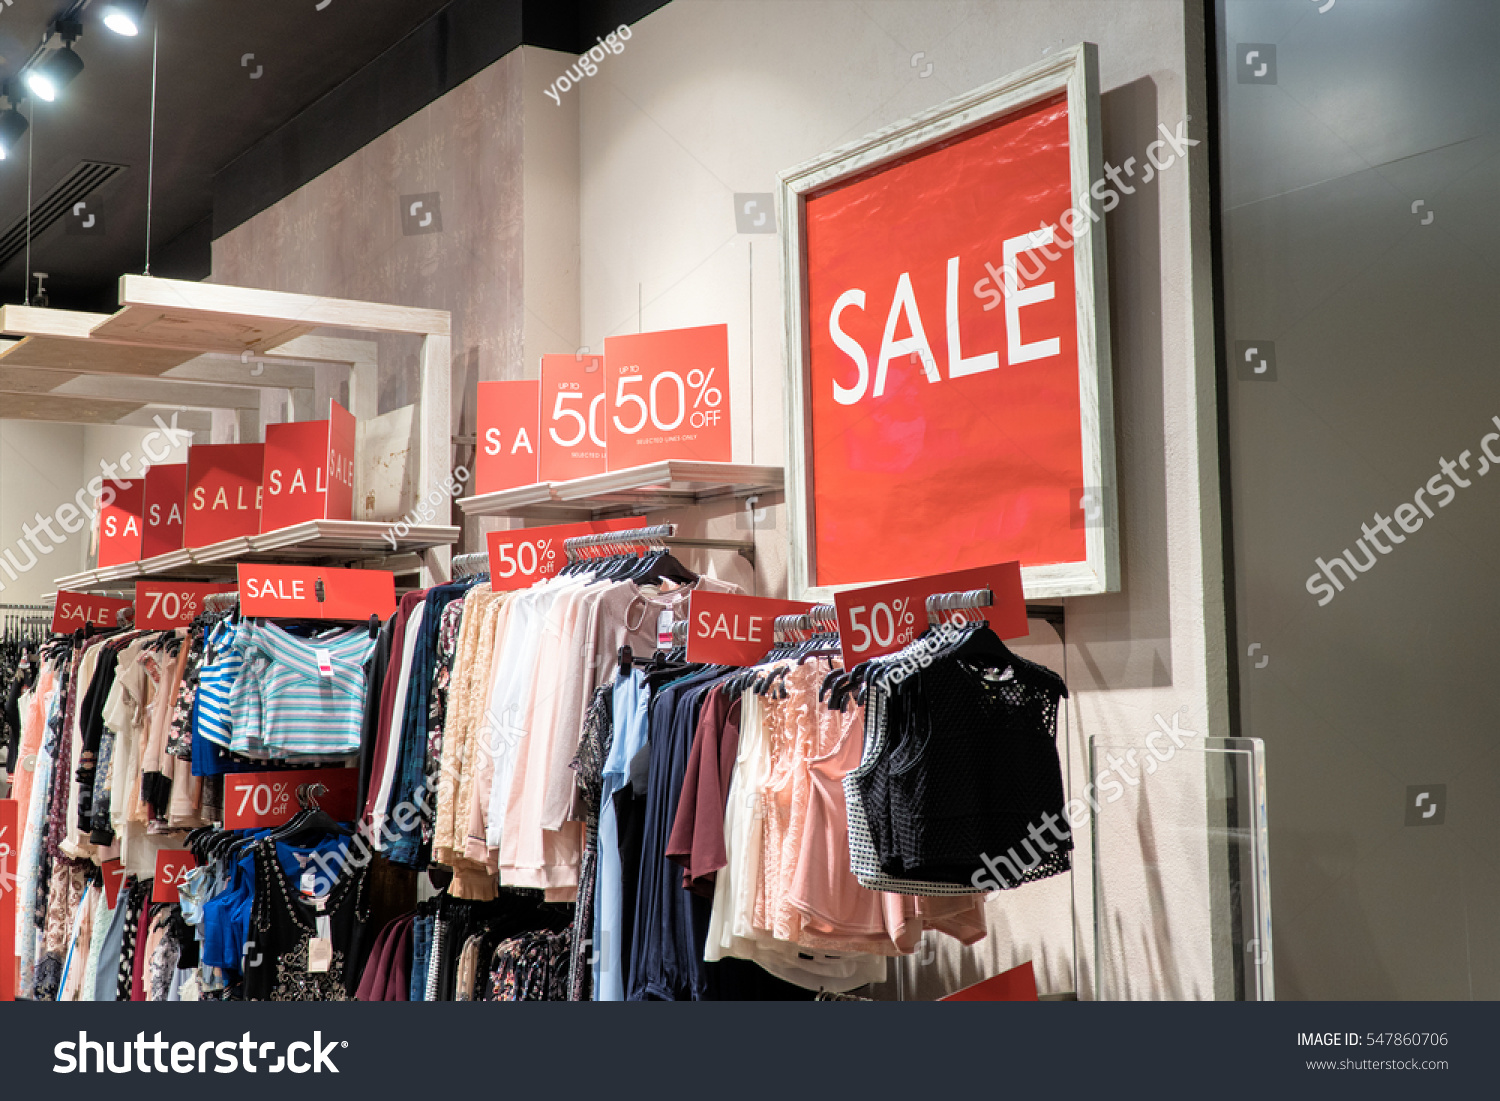 Kinderachtig Nog steeds Beven Sale Label Sign Front Shopsale Shopping Stock Photo (Edit Now) 547860706